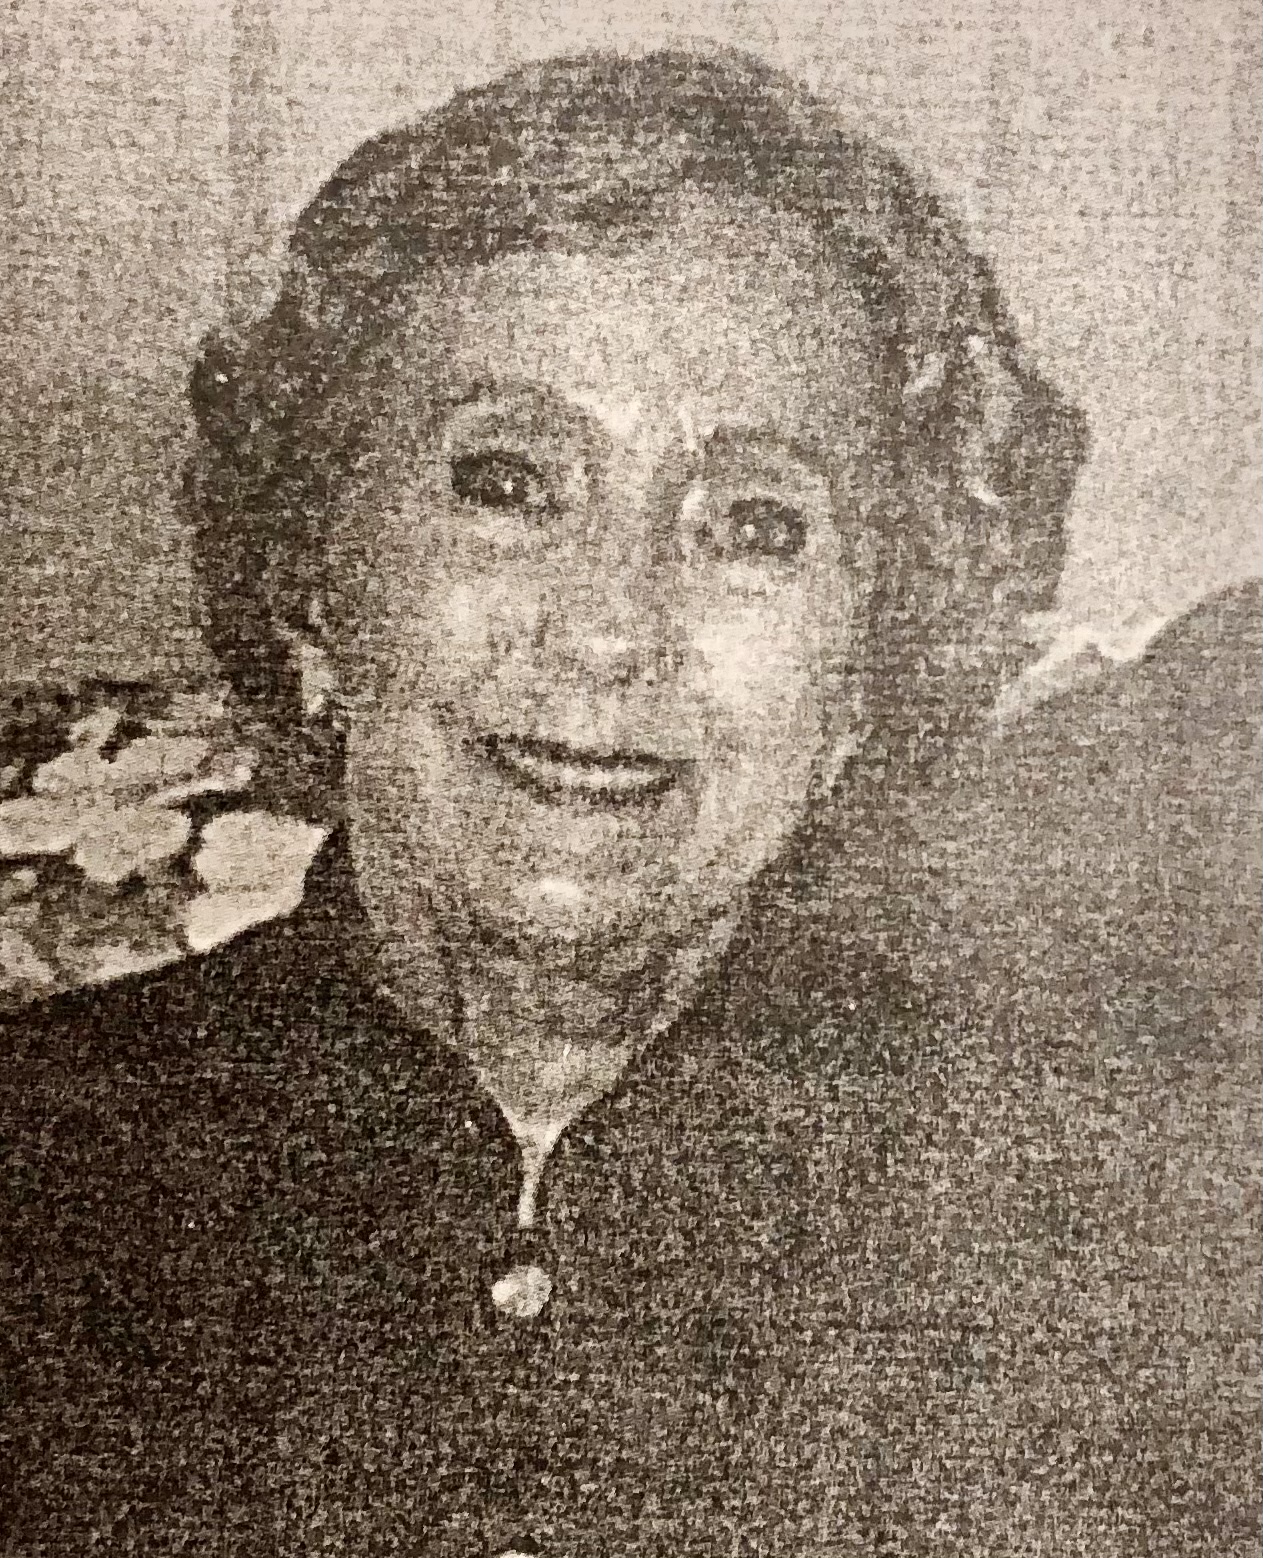 Marian K. Roth